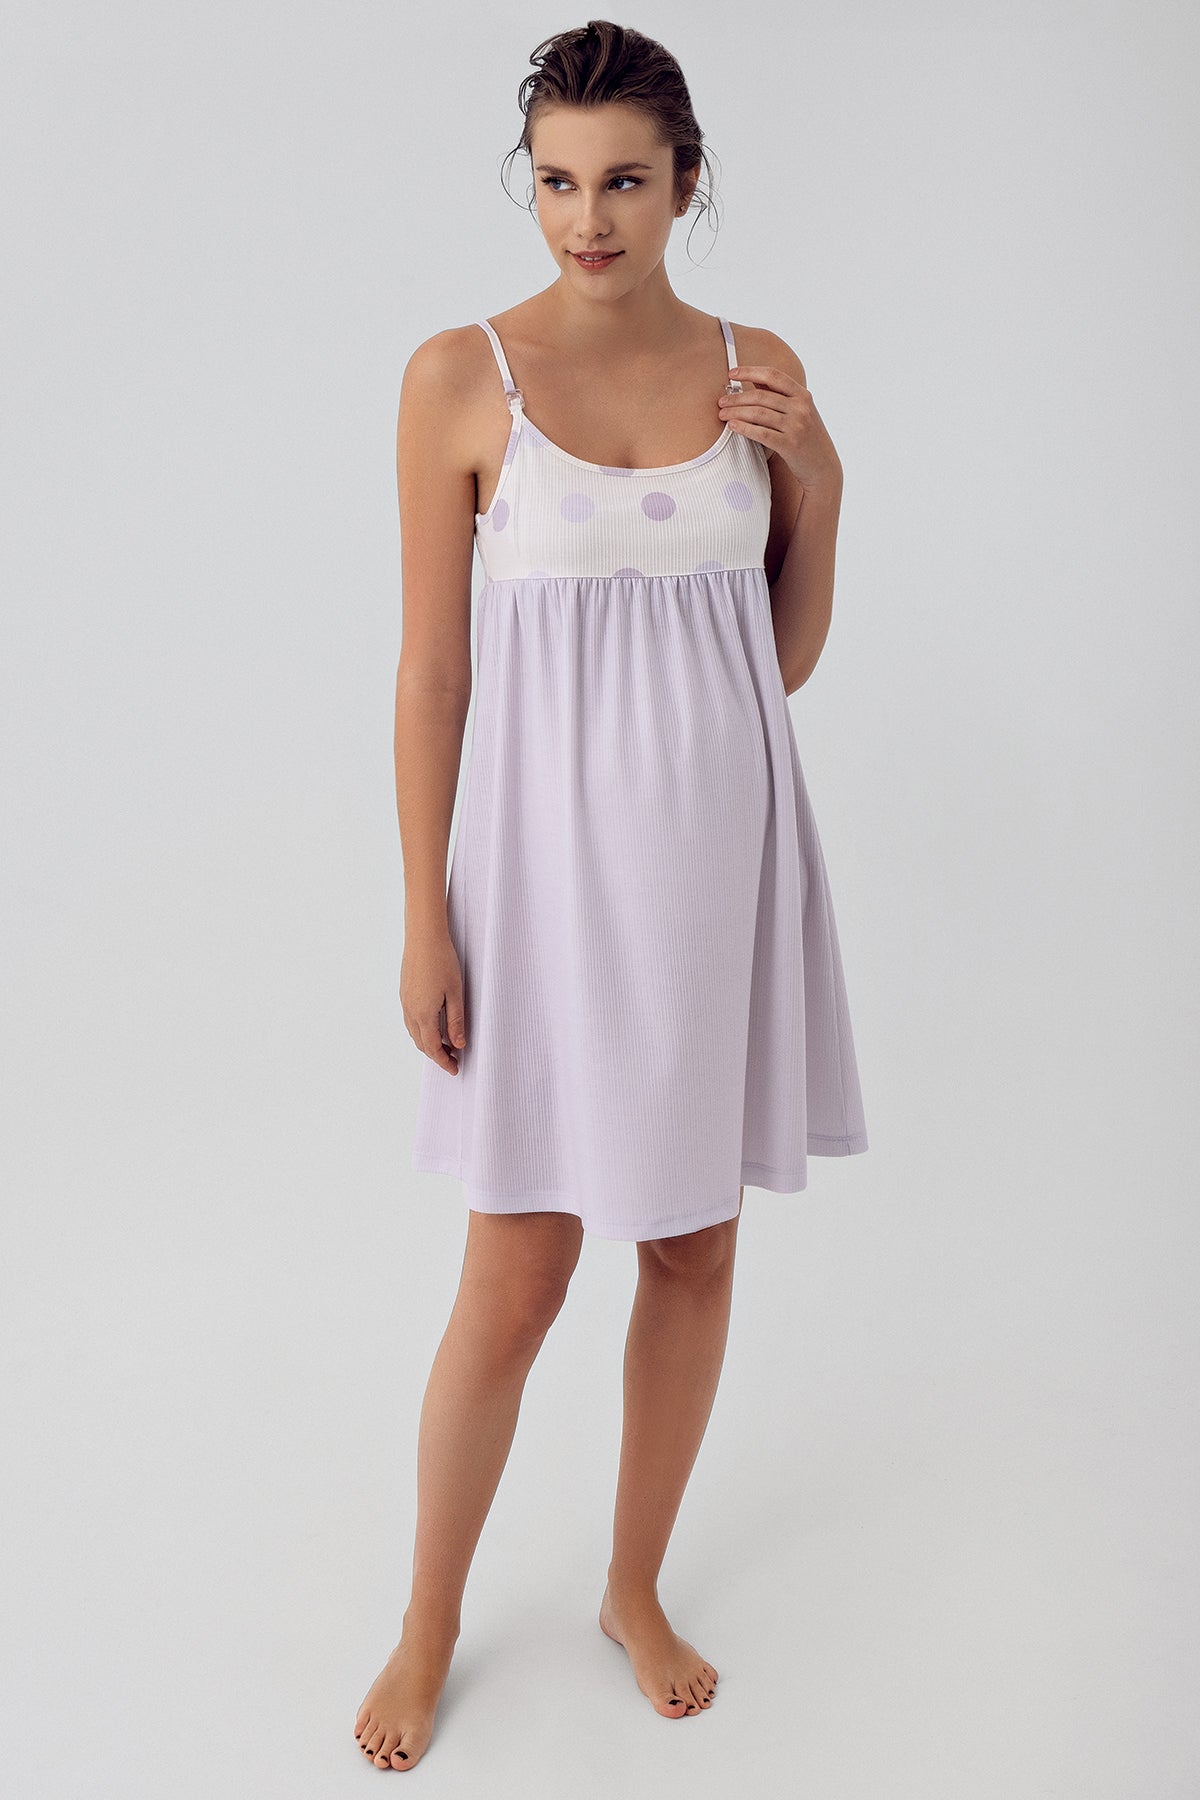 Shopymommy 16401 Polka Dot Maternity & Nursing Nightgown With Robe Lilac